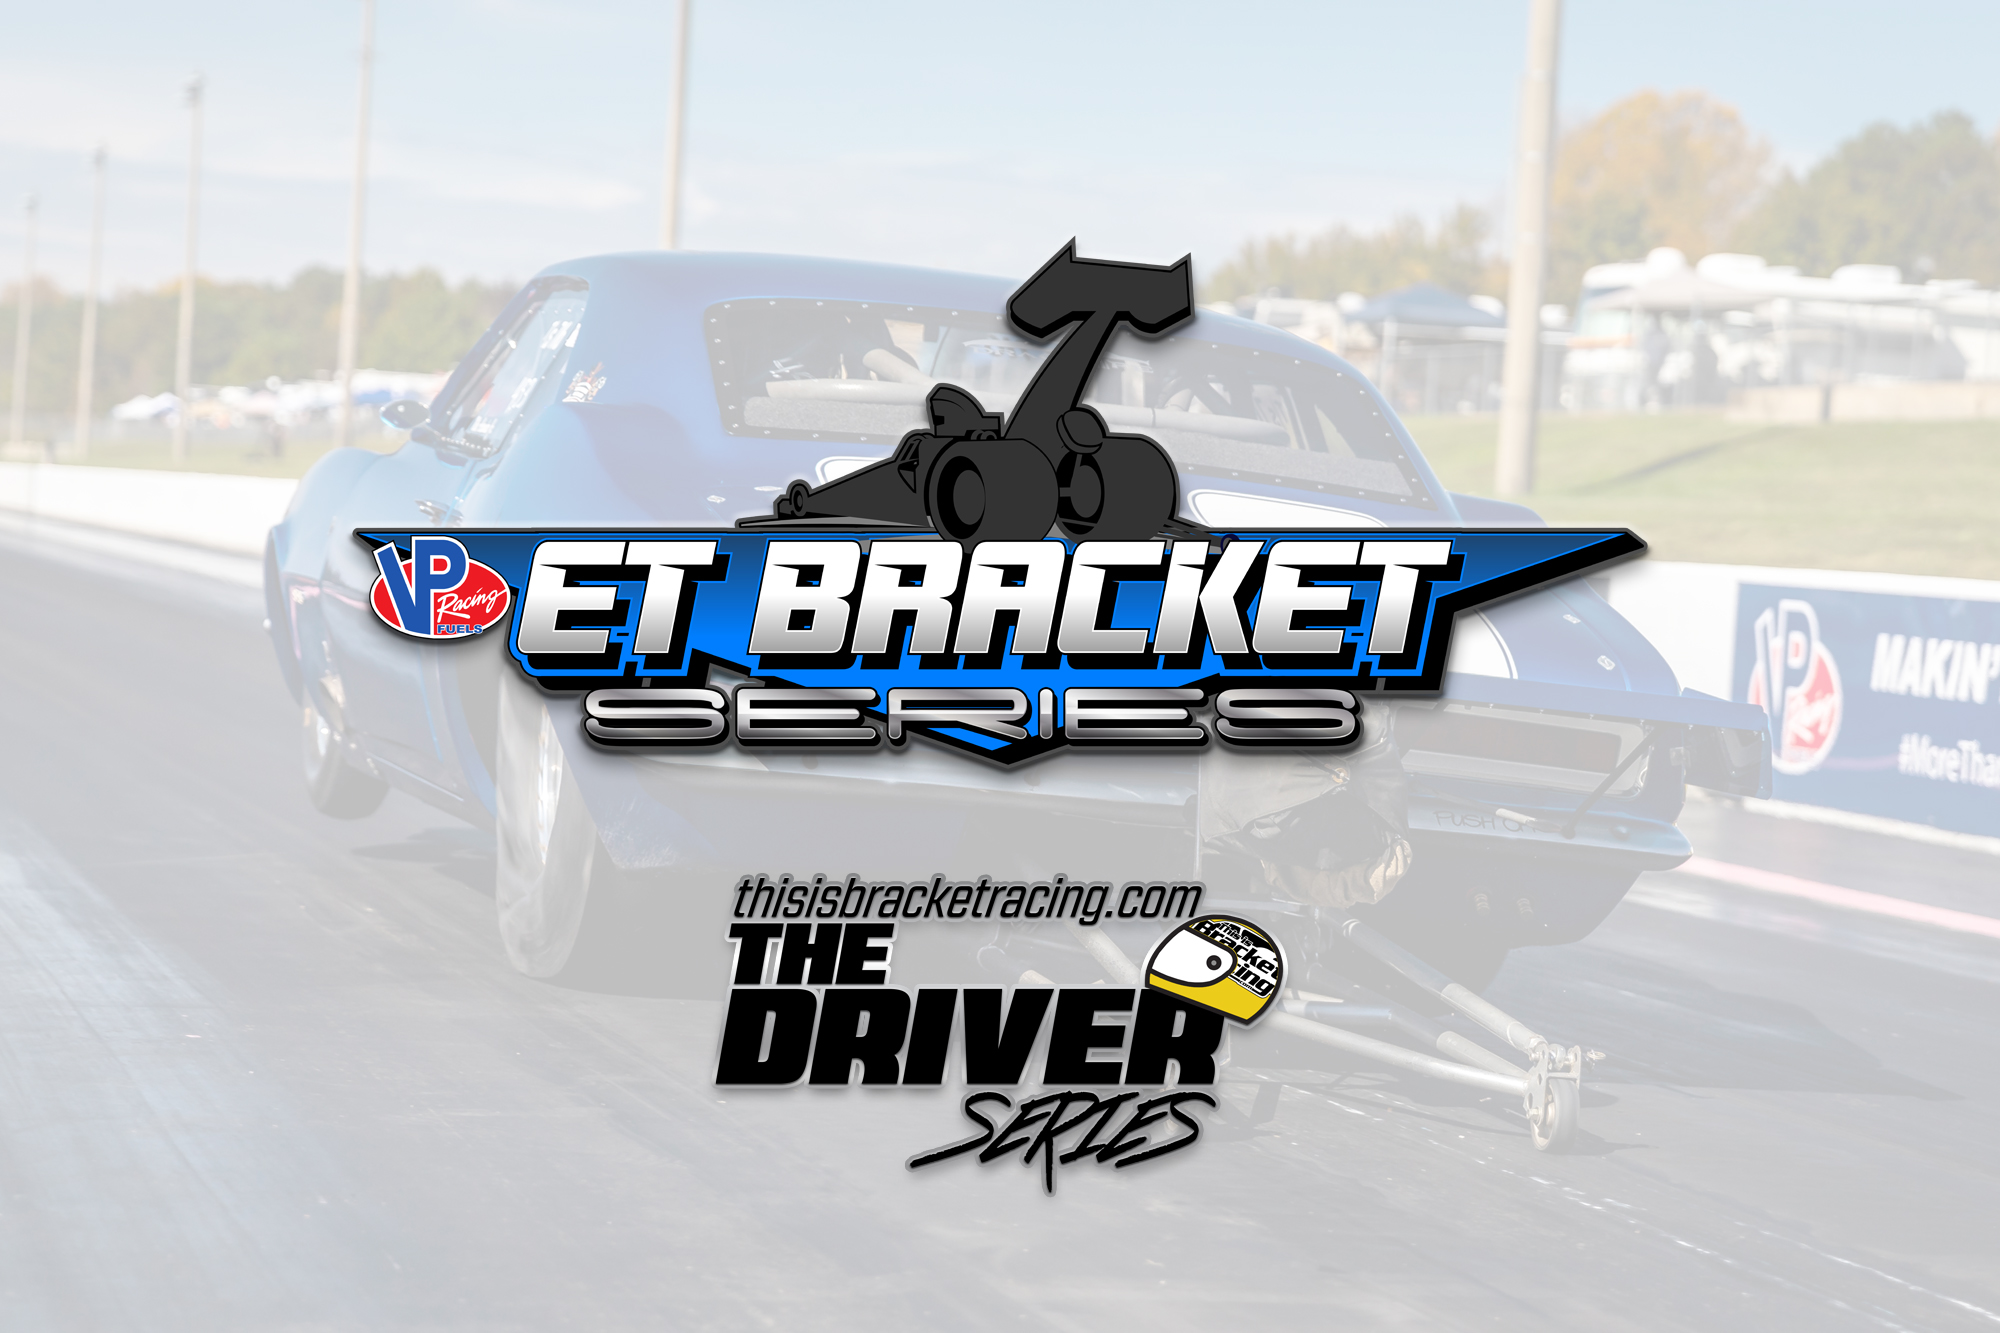 Details for 2021 VP Fuels ET Bracket Series + ThisIsBracketRacing.com Driver Series!